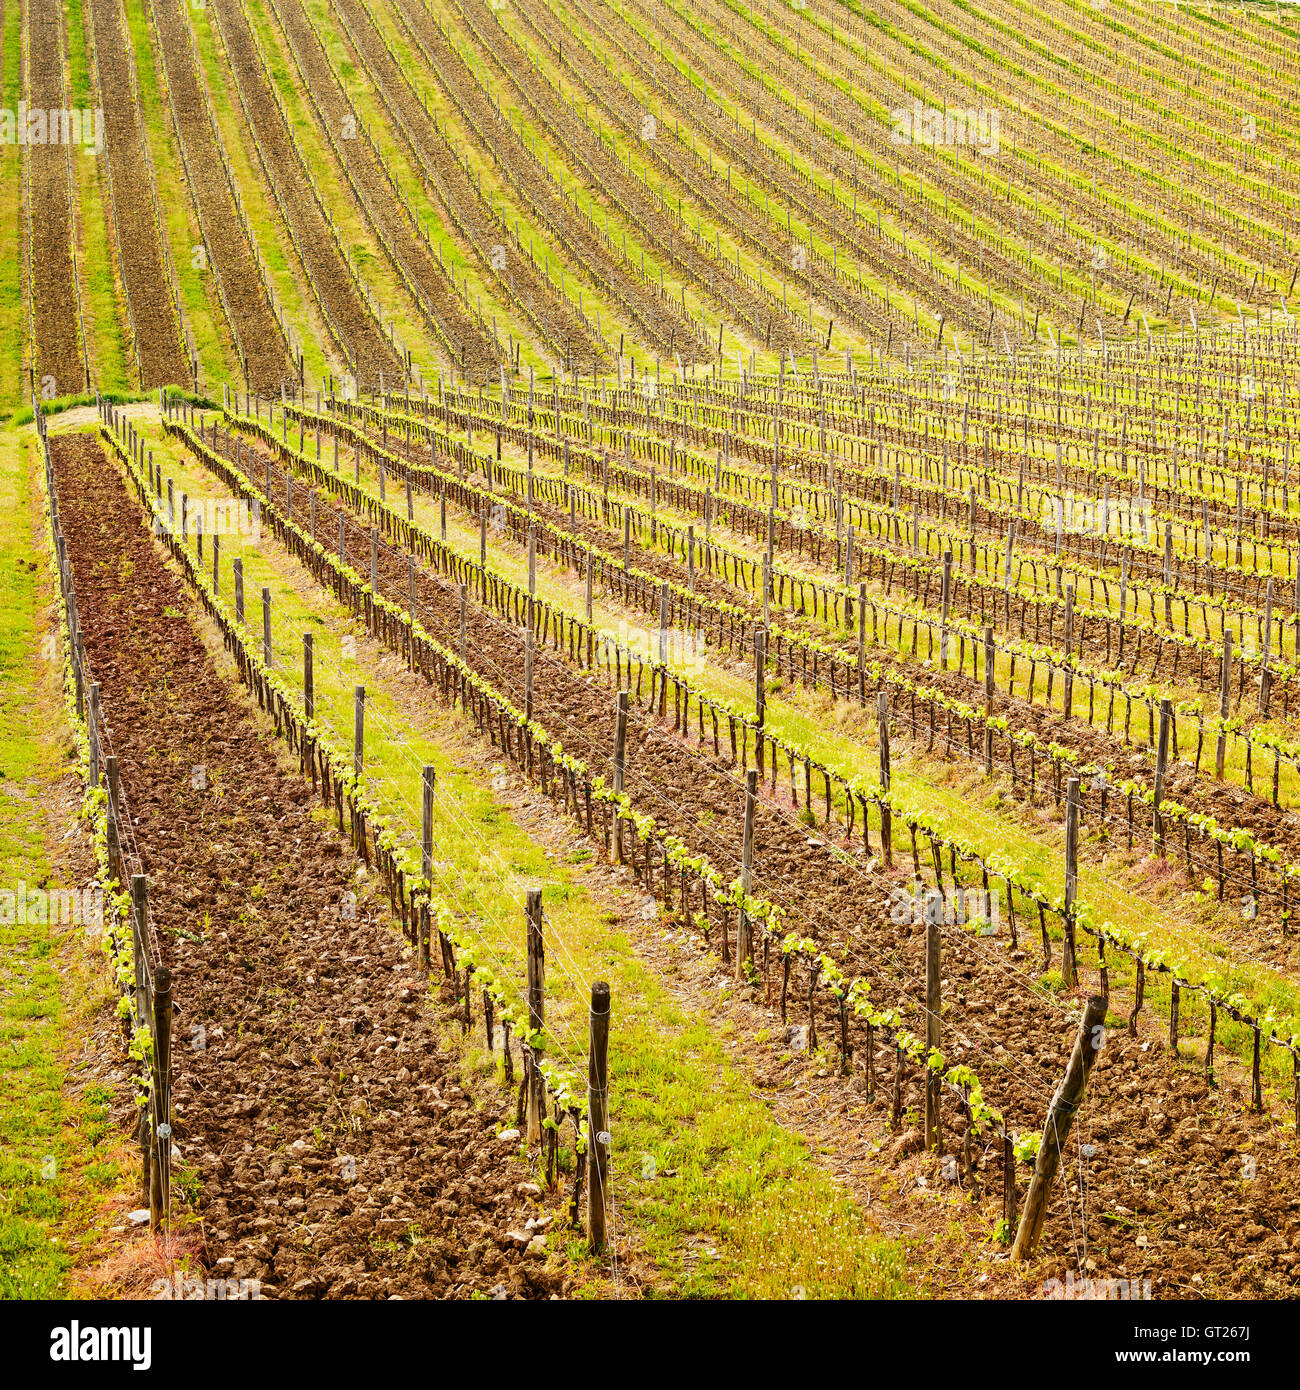 Chianti-Gebiet, Weinberg Ackerland Muster oder Hintergrund. Toskana, Italien, Europa. Stockfoto